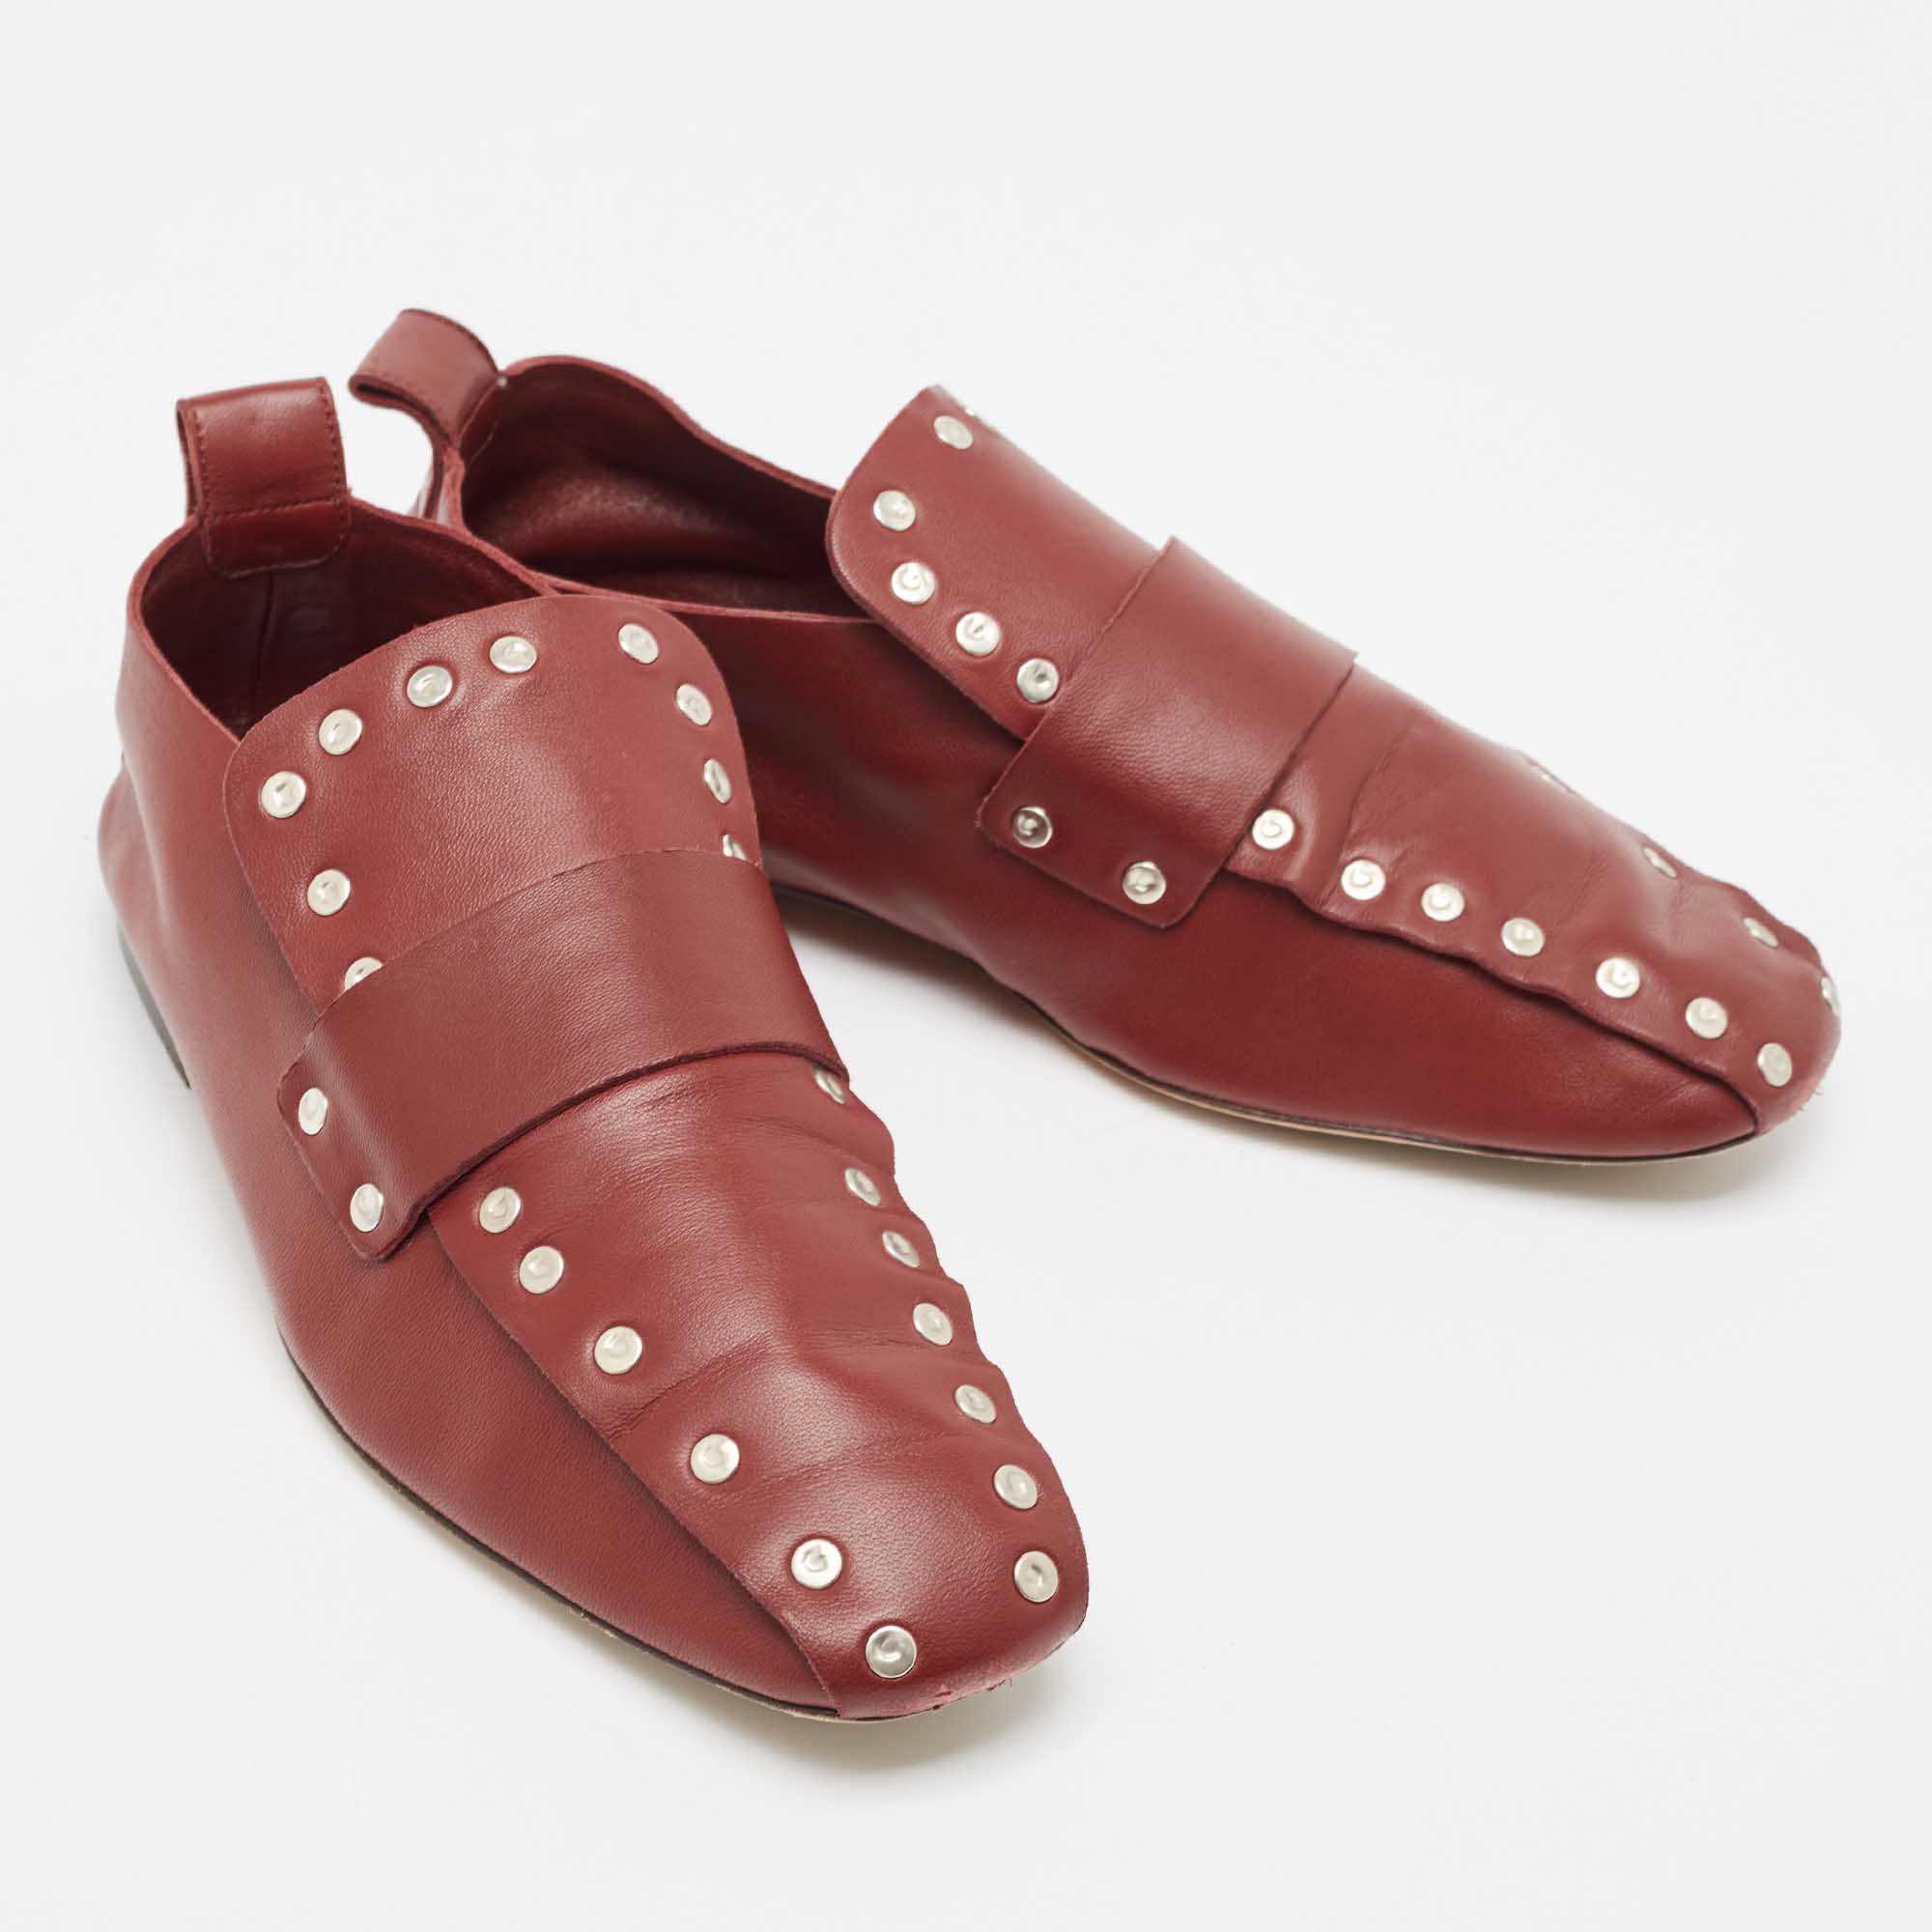 Celine Red Leather Slip On Loafers Size 38